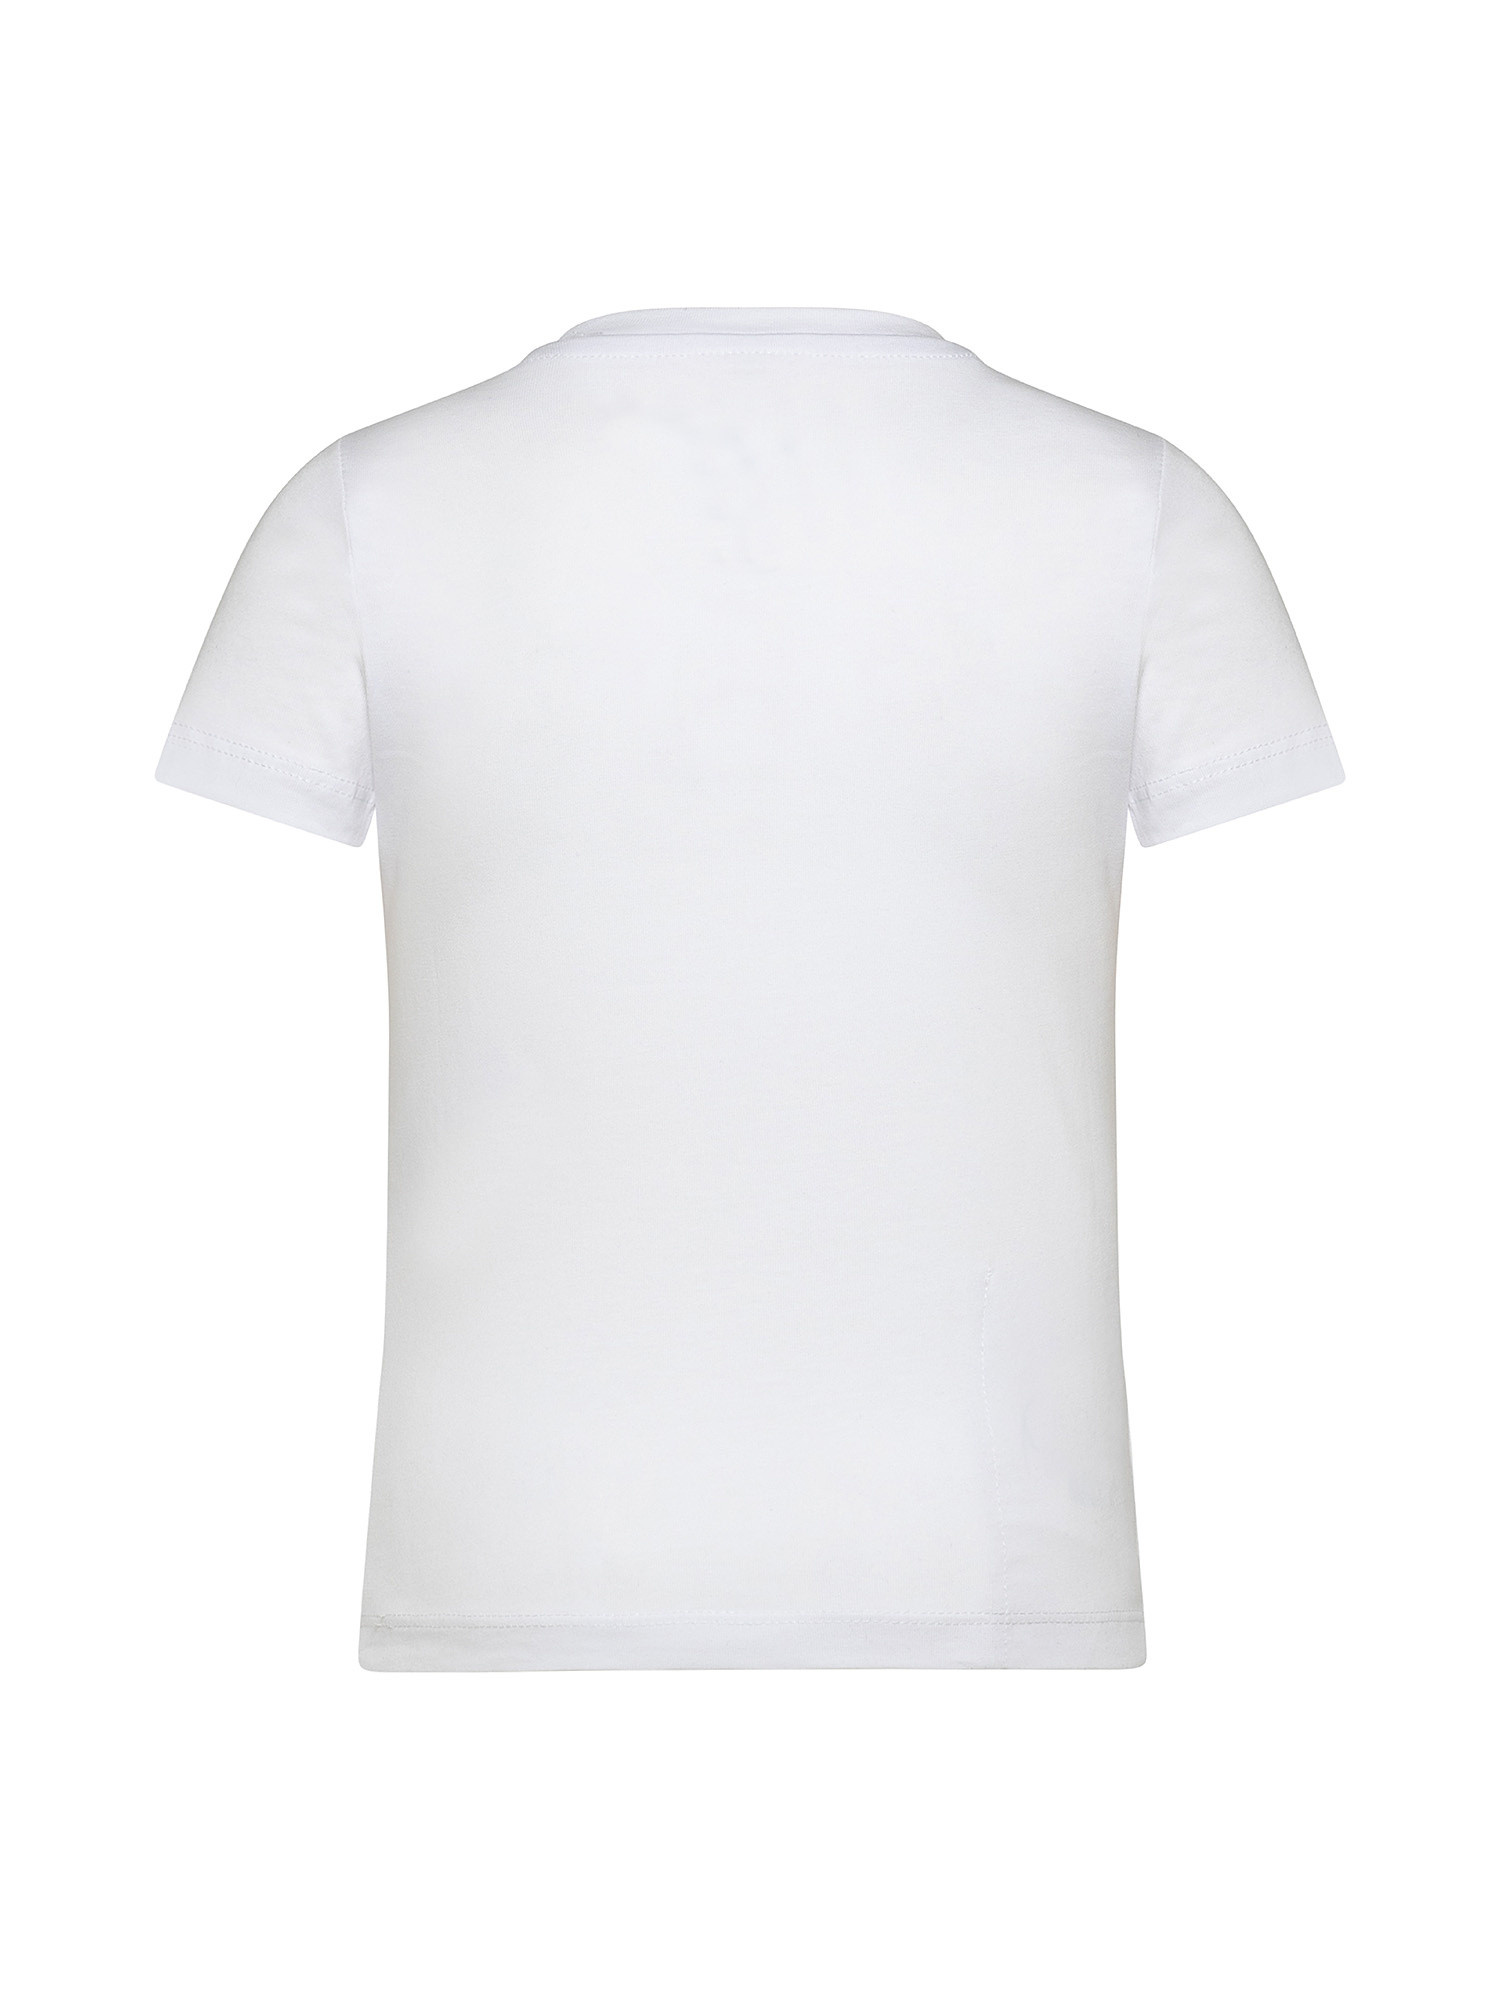 Regular fit boy's T-shirt, White, large image number 1